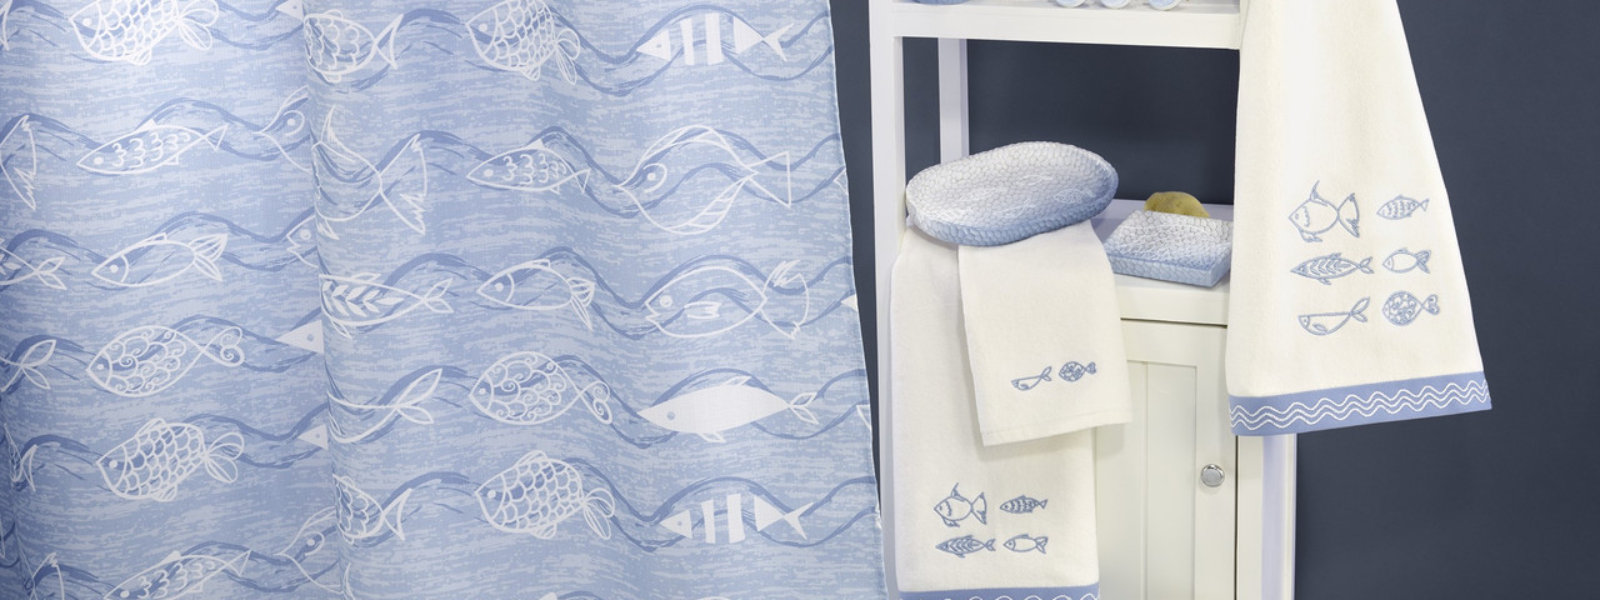 Avanti Bath Icons Hand Towel - White